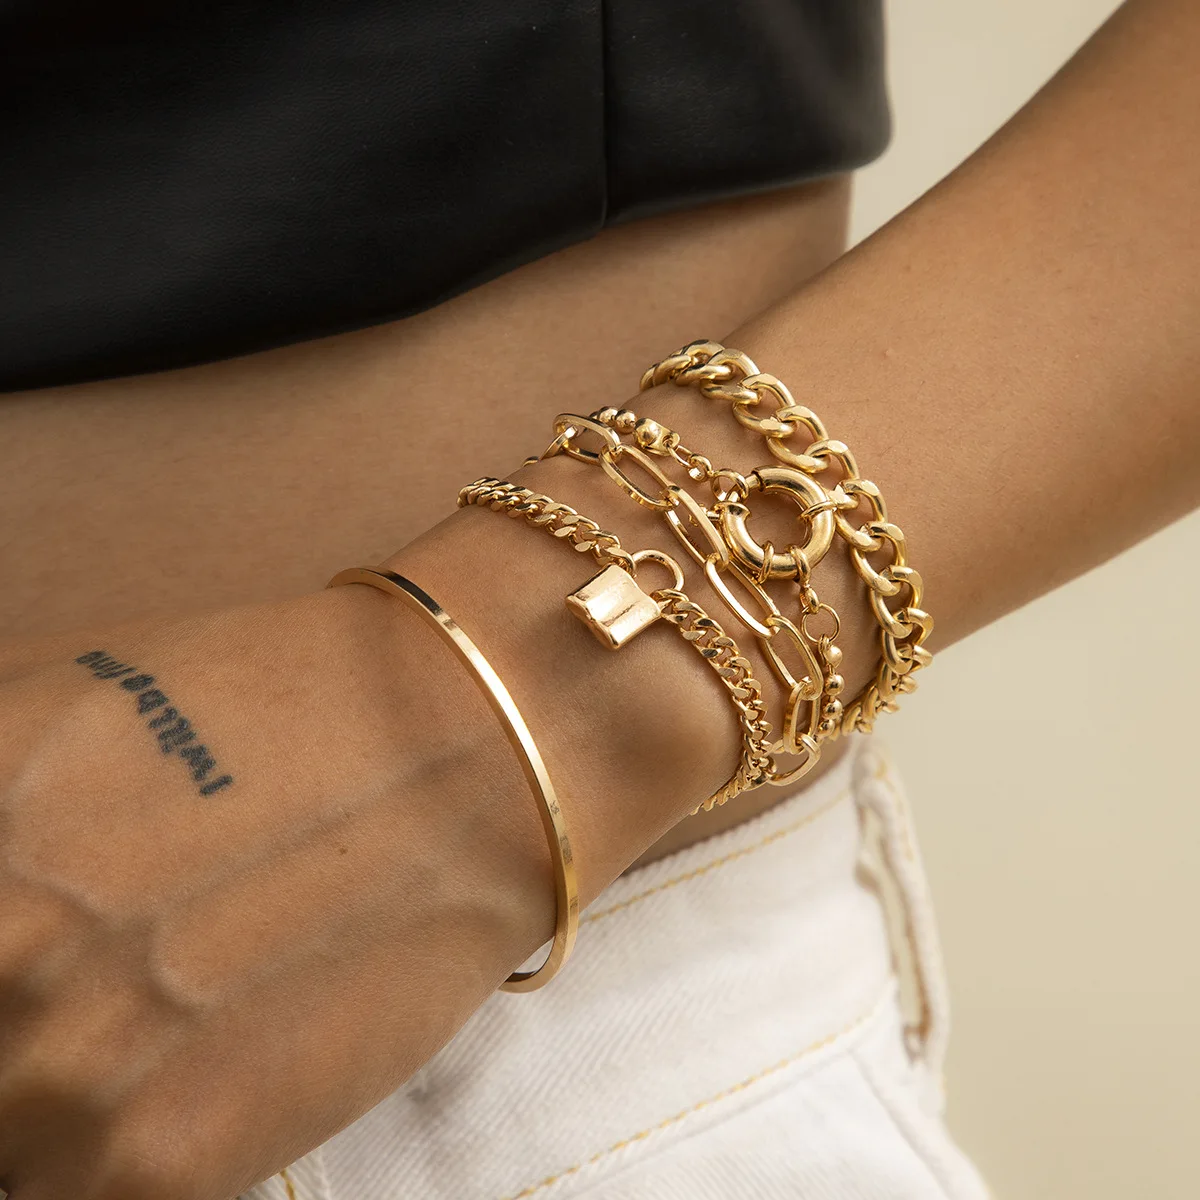 

5PCS/Set Multilayer Gold Sliver Plated Chain Bracelets & Bangles for Women Men Couples Boho Jewelry Gift Chunky Lock Bracelet, Sliver,gold